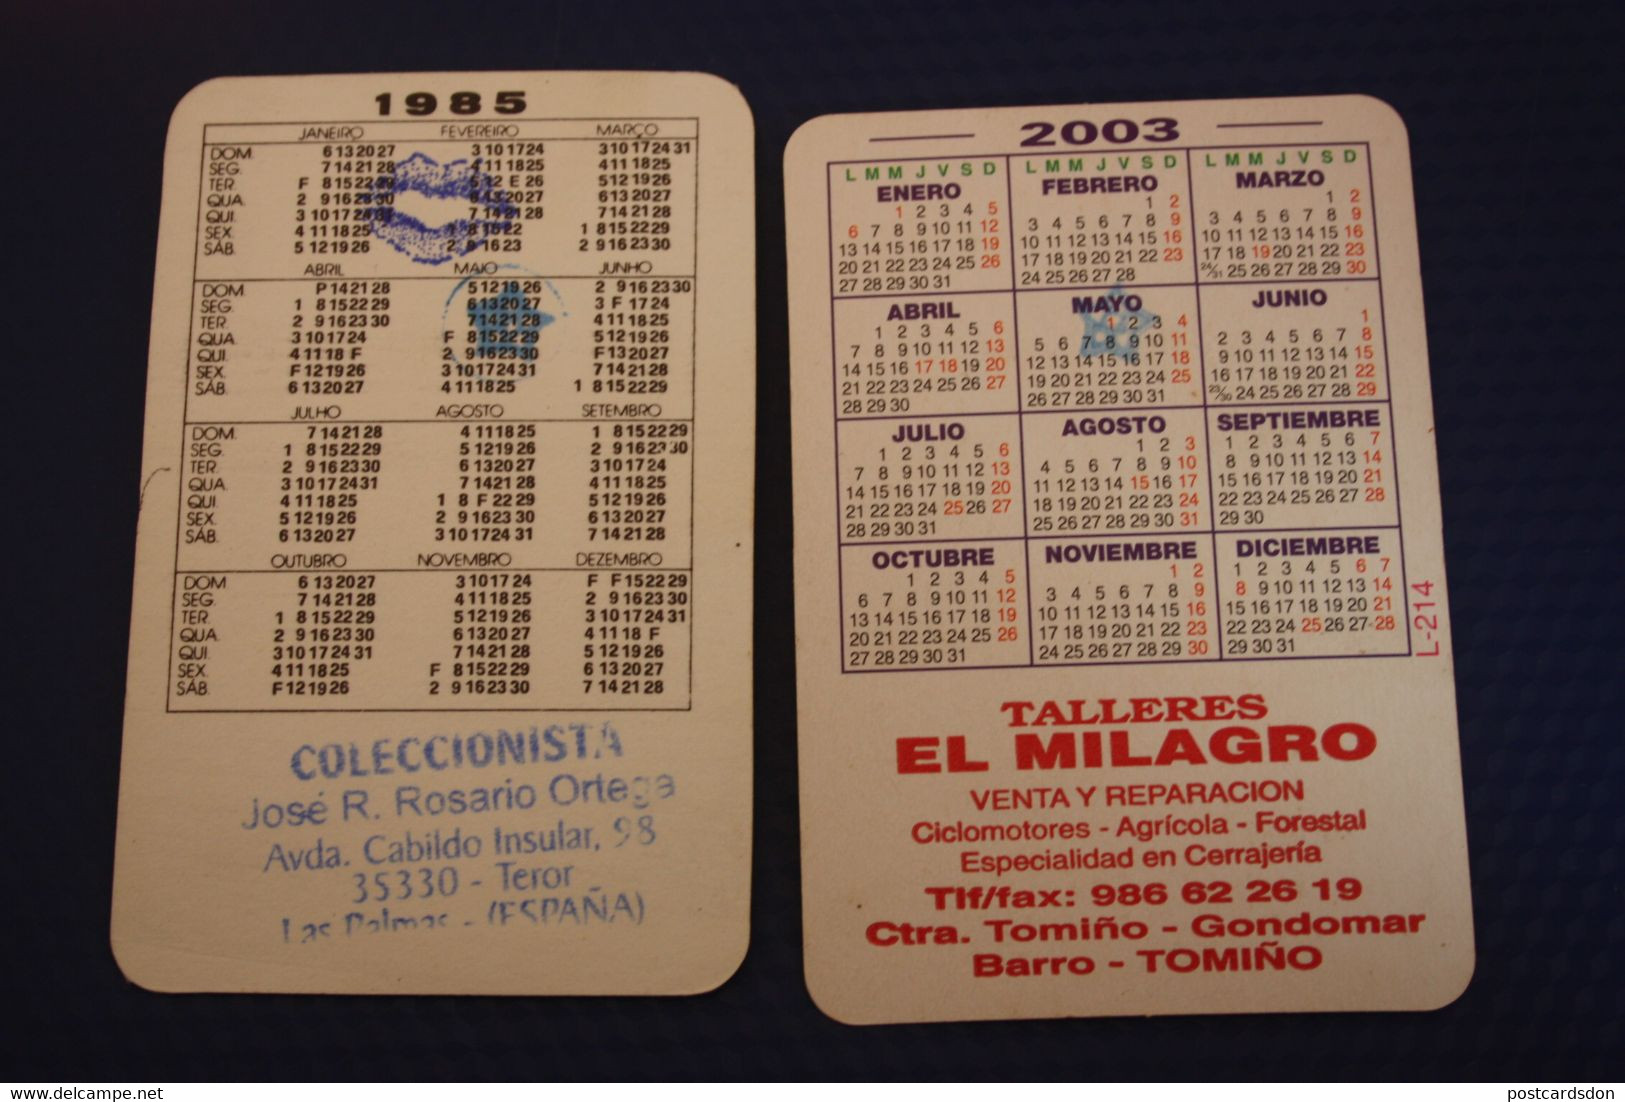 Small : 1981-90 - 2 items lot / Spanish CALENDRIER DE POCHE EROTIQUE FEMME  NU- pretty girl - POCKET calendar -1985- erotic - SEXY - NUDE